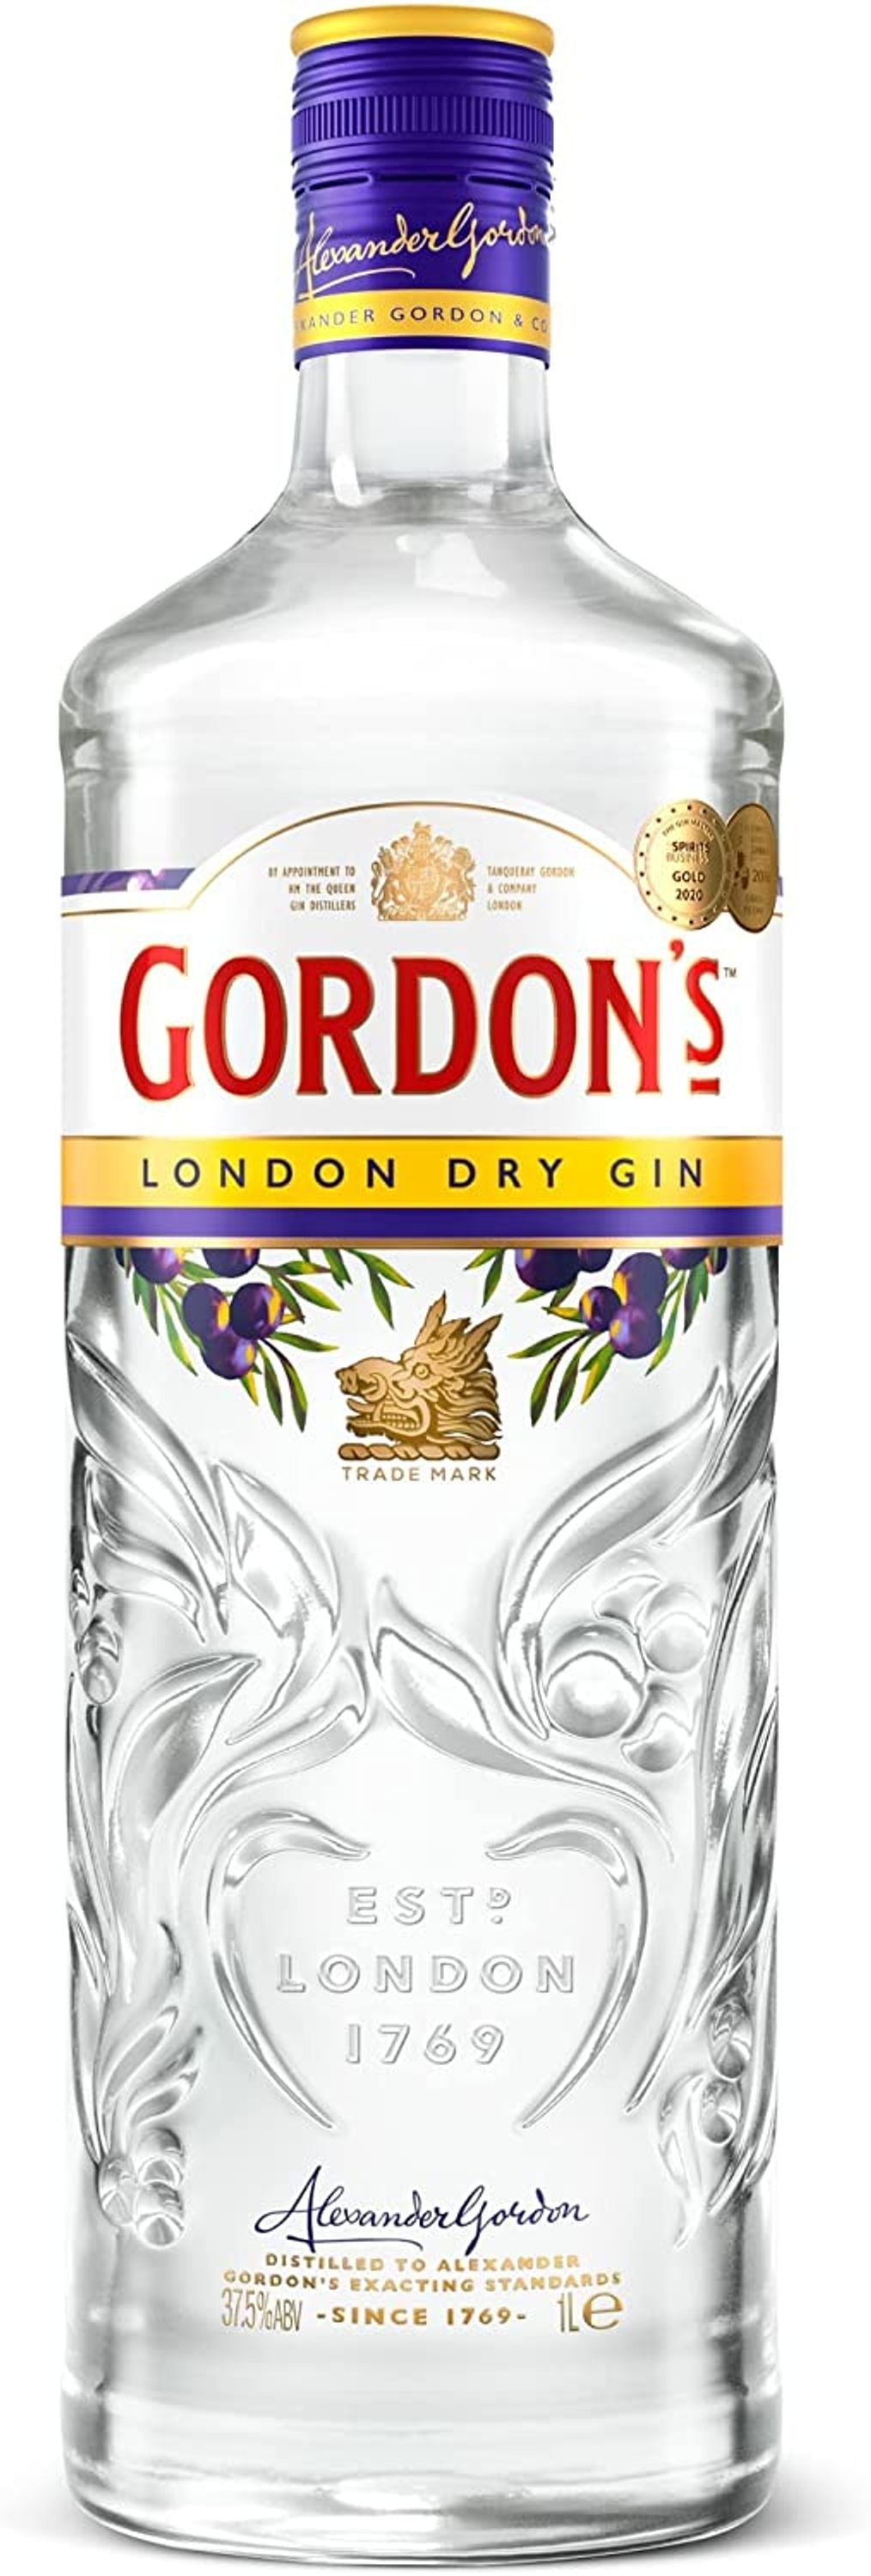 Gordon's London Dry Gin 0,7l, alc. 37,5 Vol.-%, Gin England